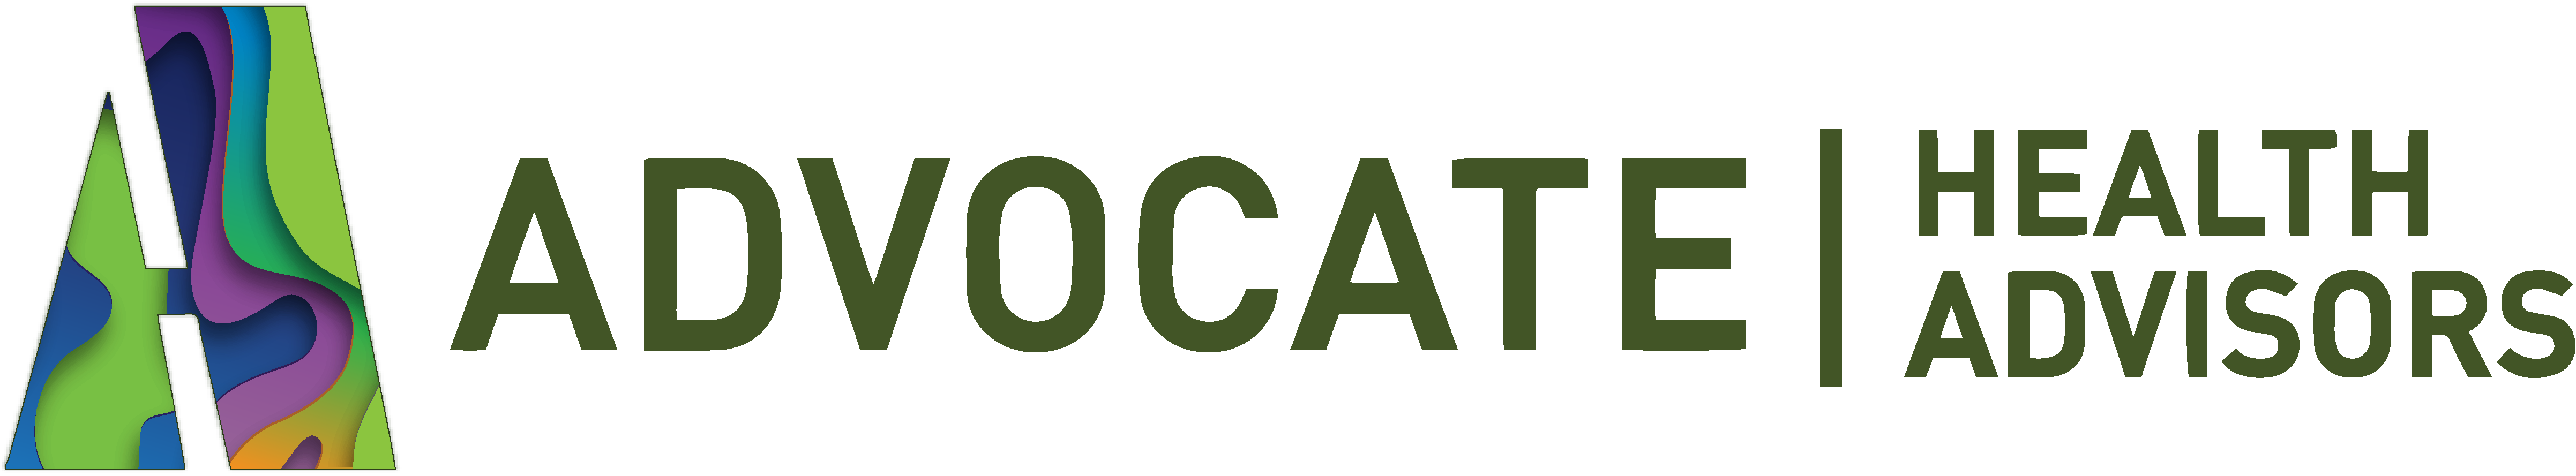 Advocate Health Advisors Logo